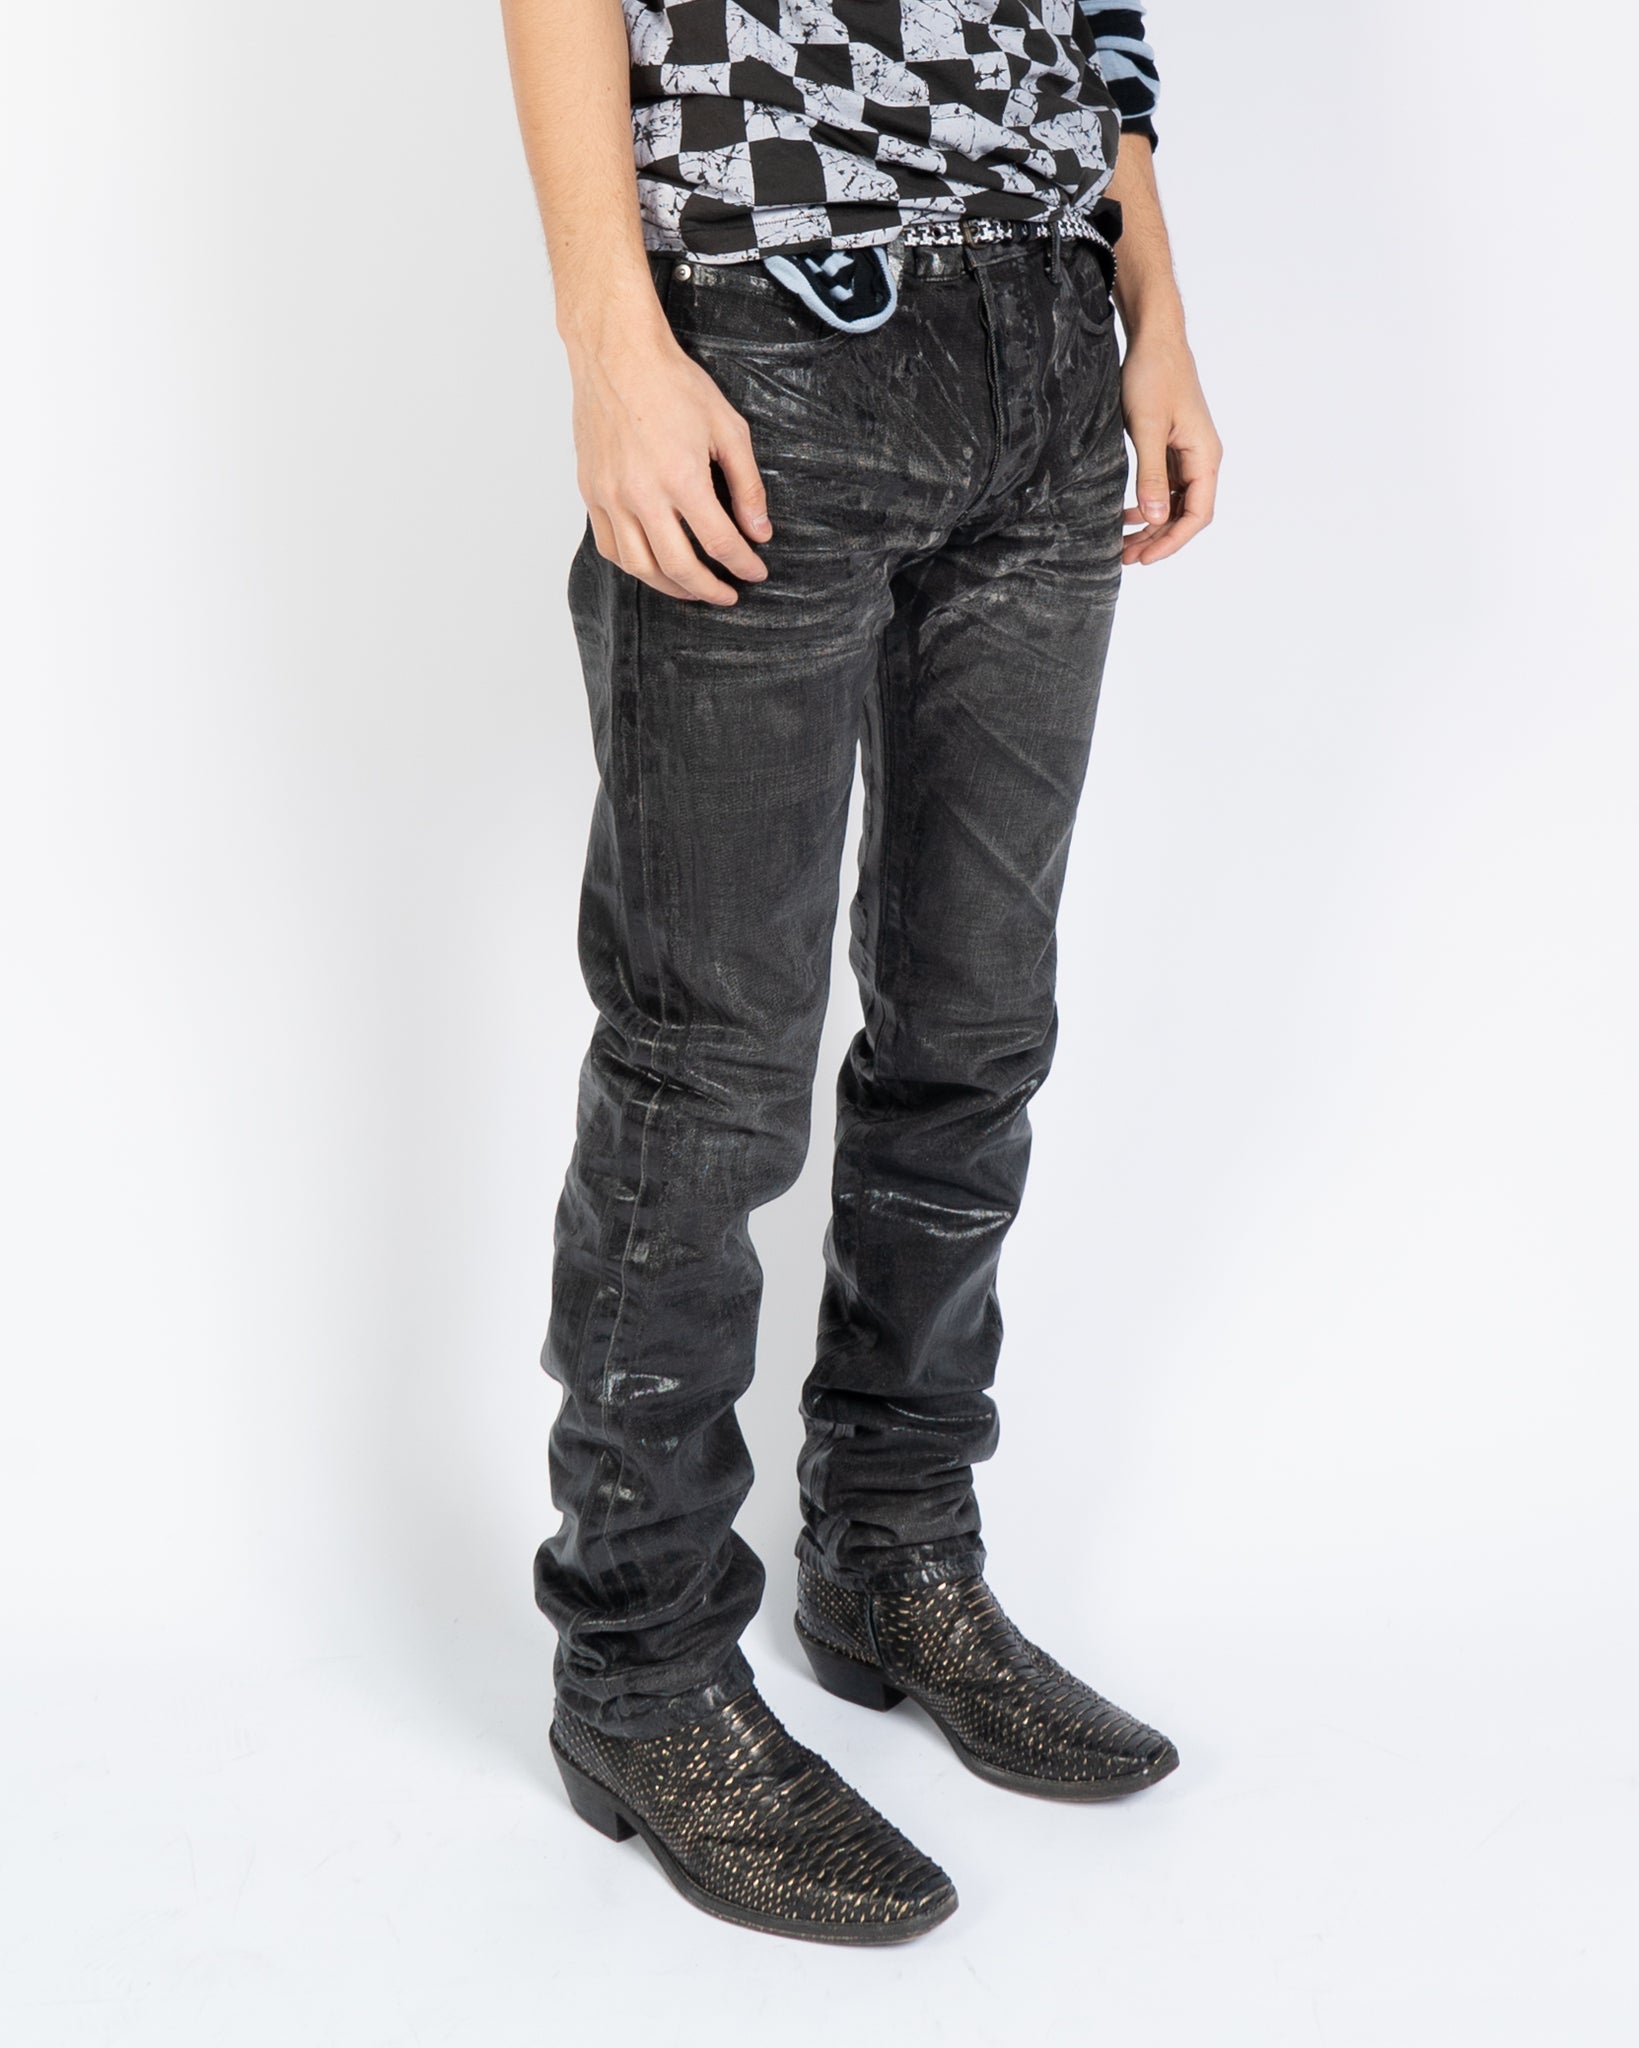 ZD38-1 Oil Black Stretch Wax Denim Jeans - DOT Made